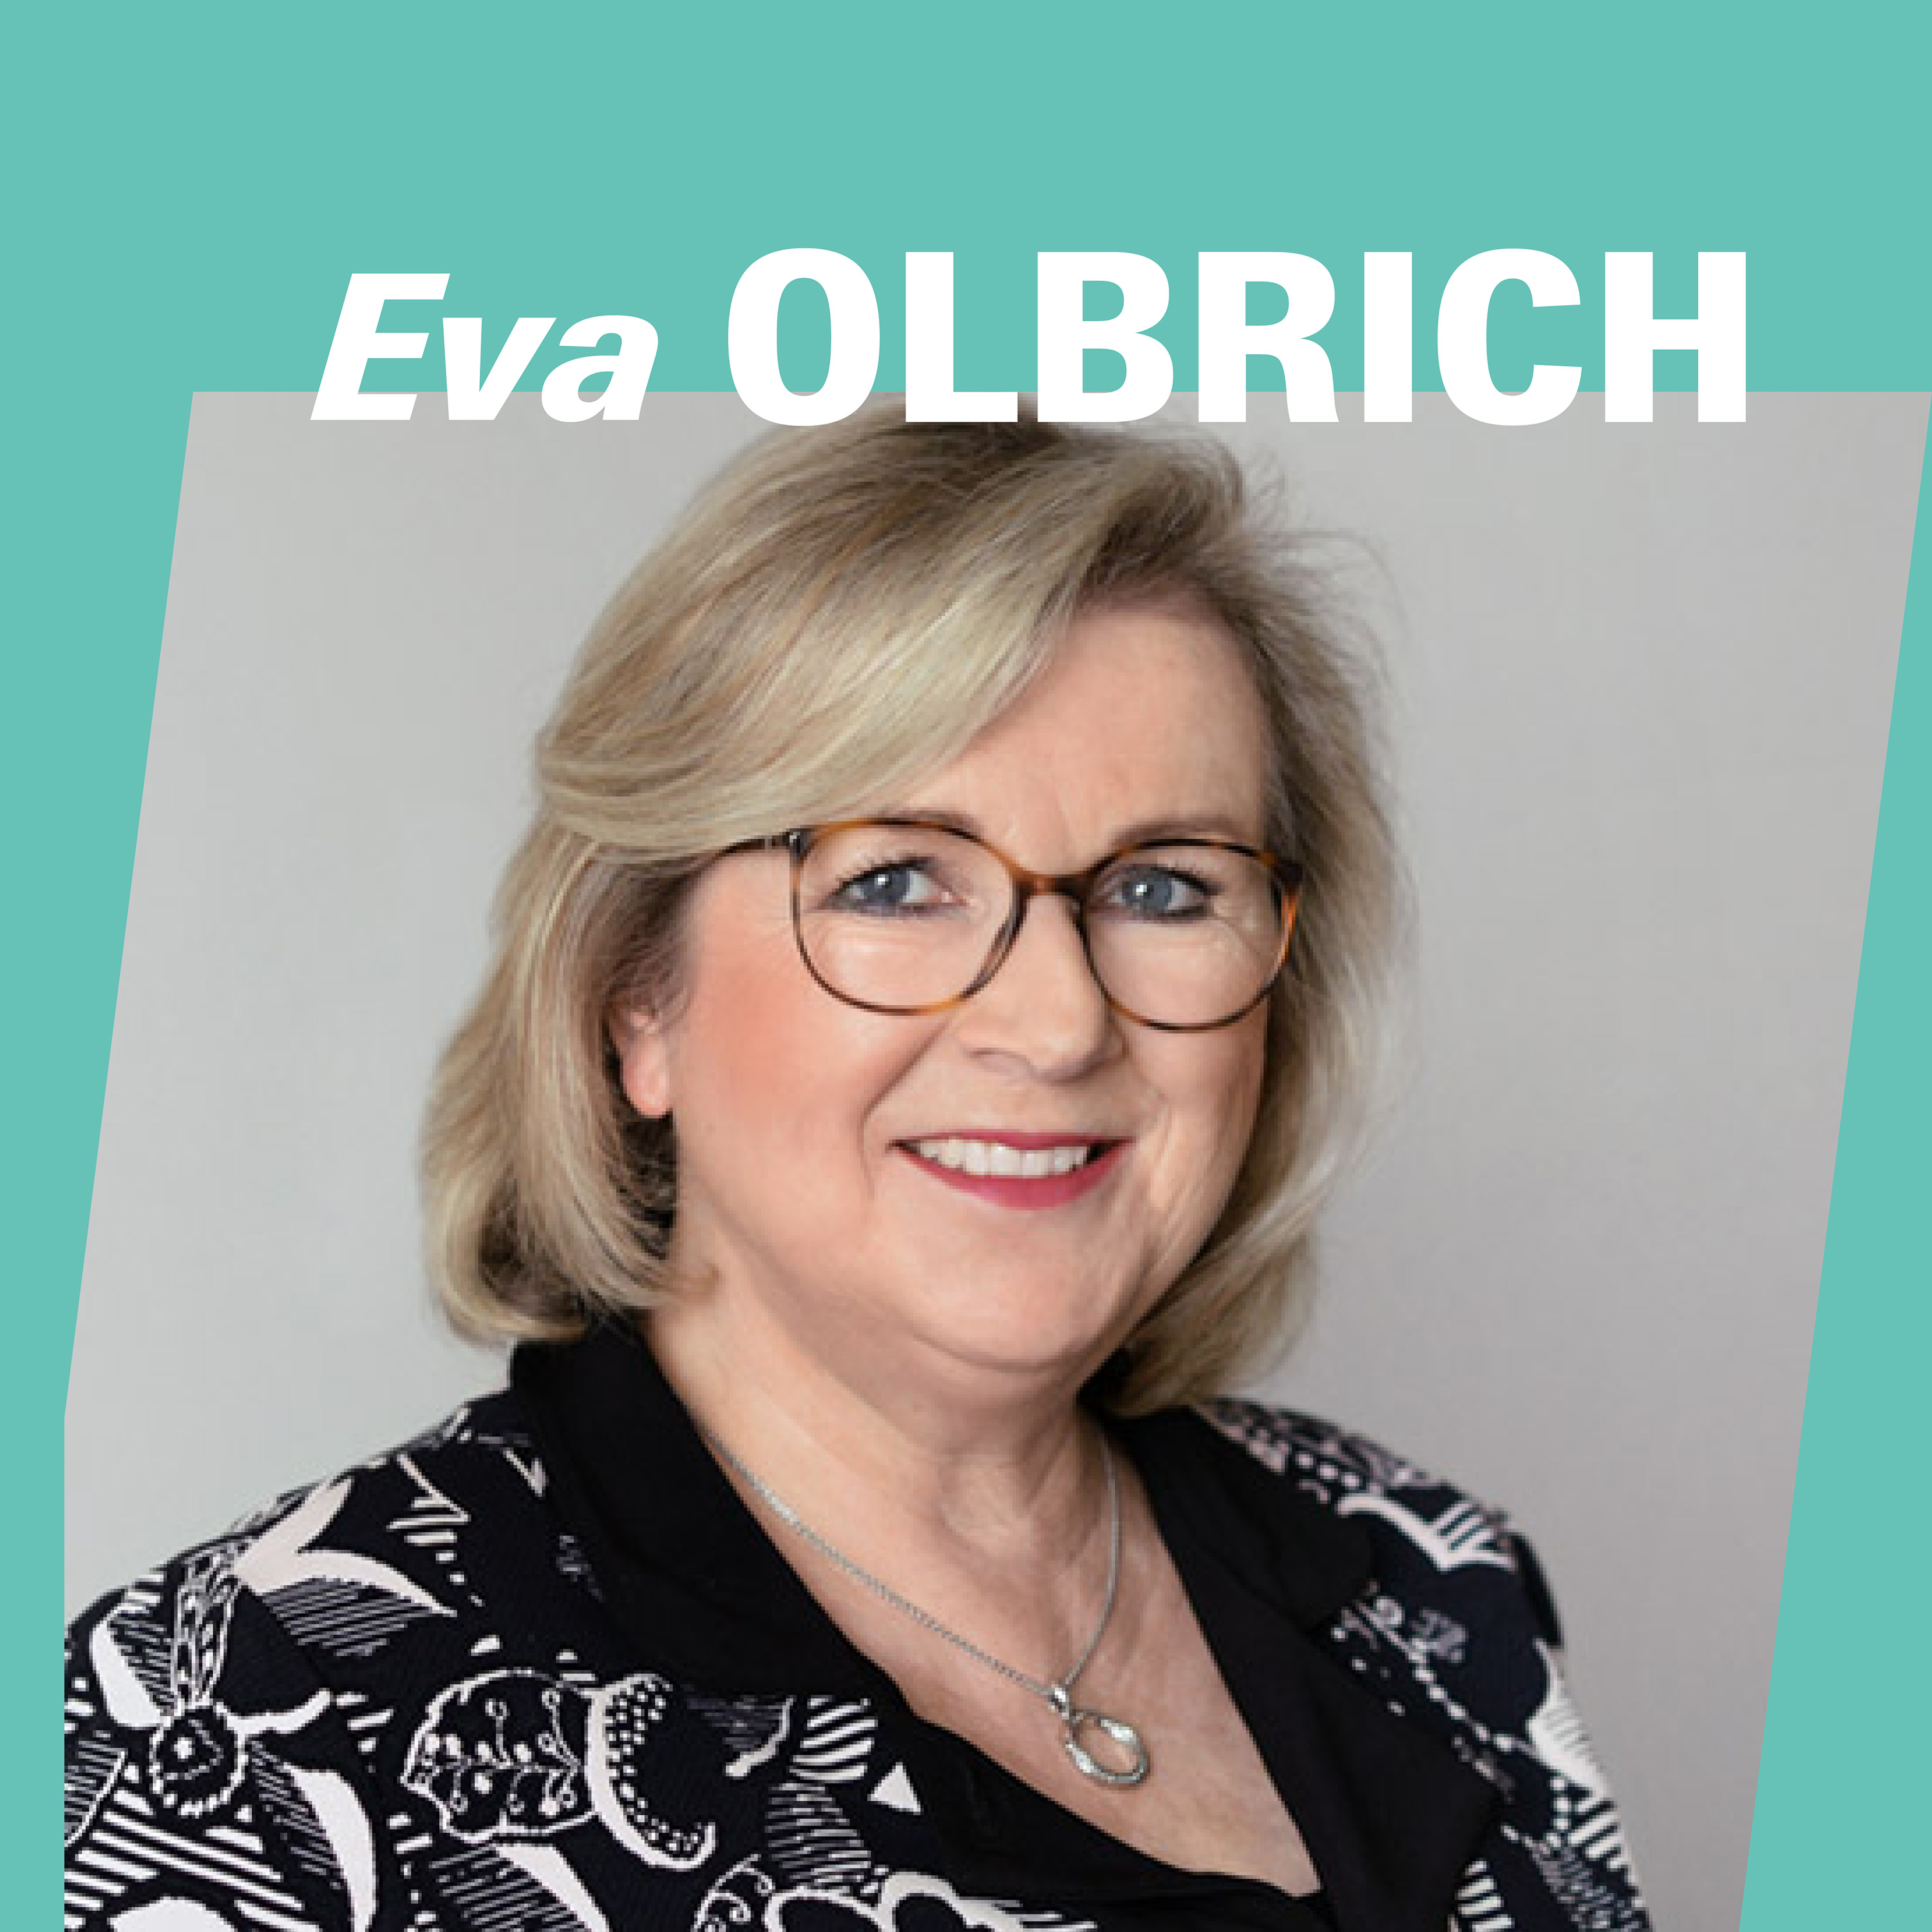 Eva Olbrich, Director Christmasworld and Creativeworld, Messe Frankfurt Exhibition GmbH